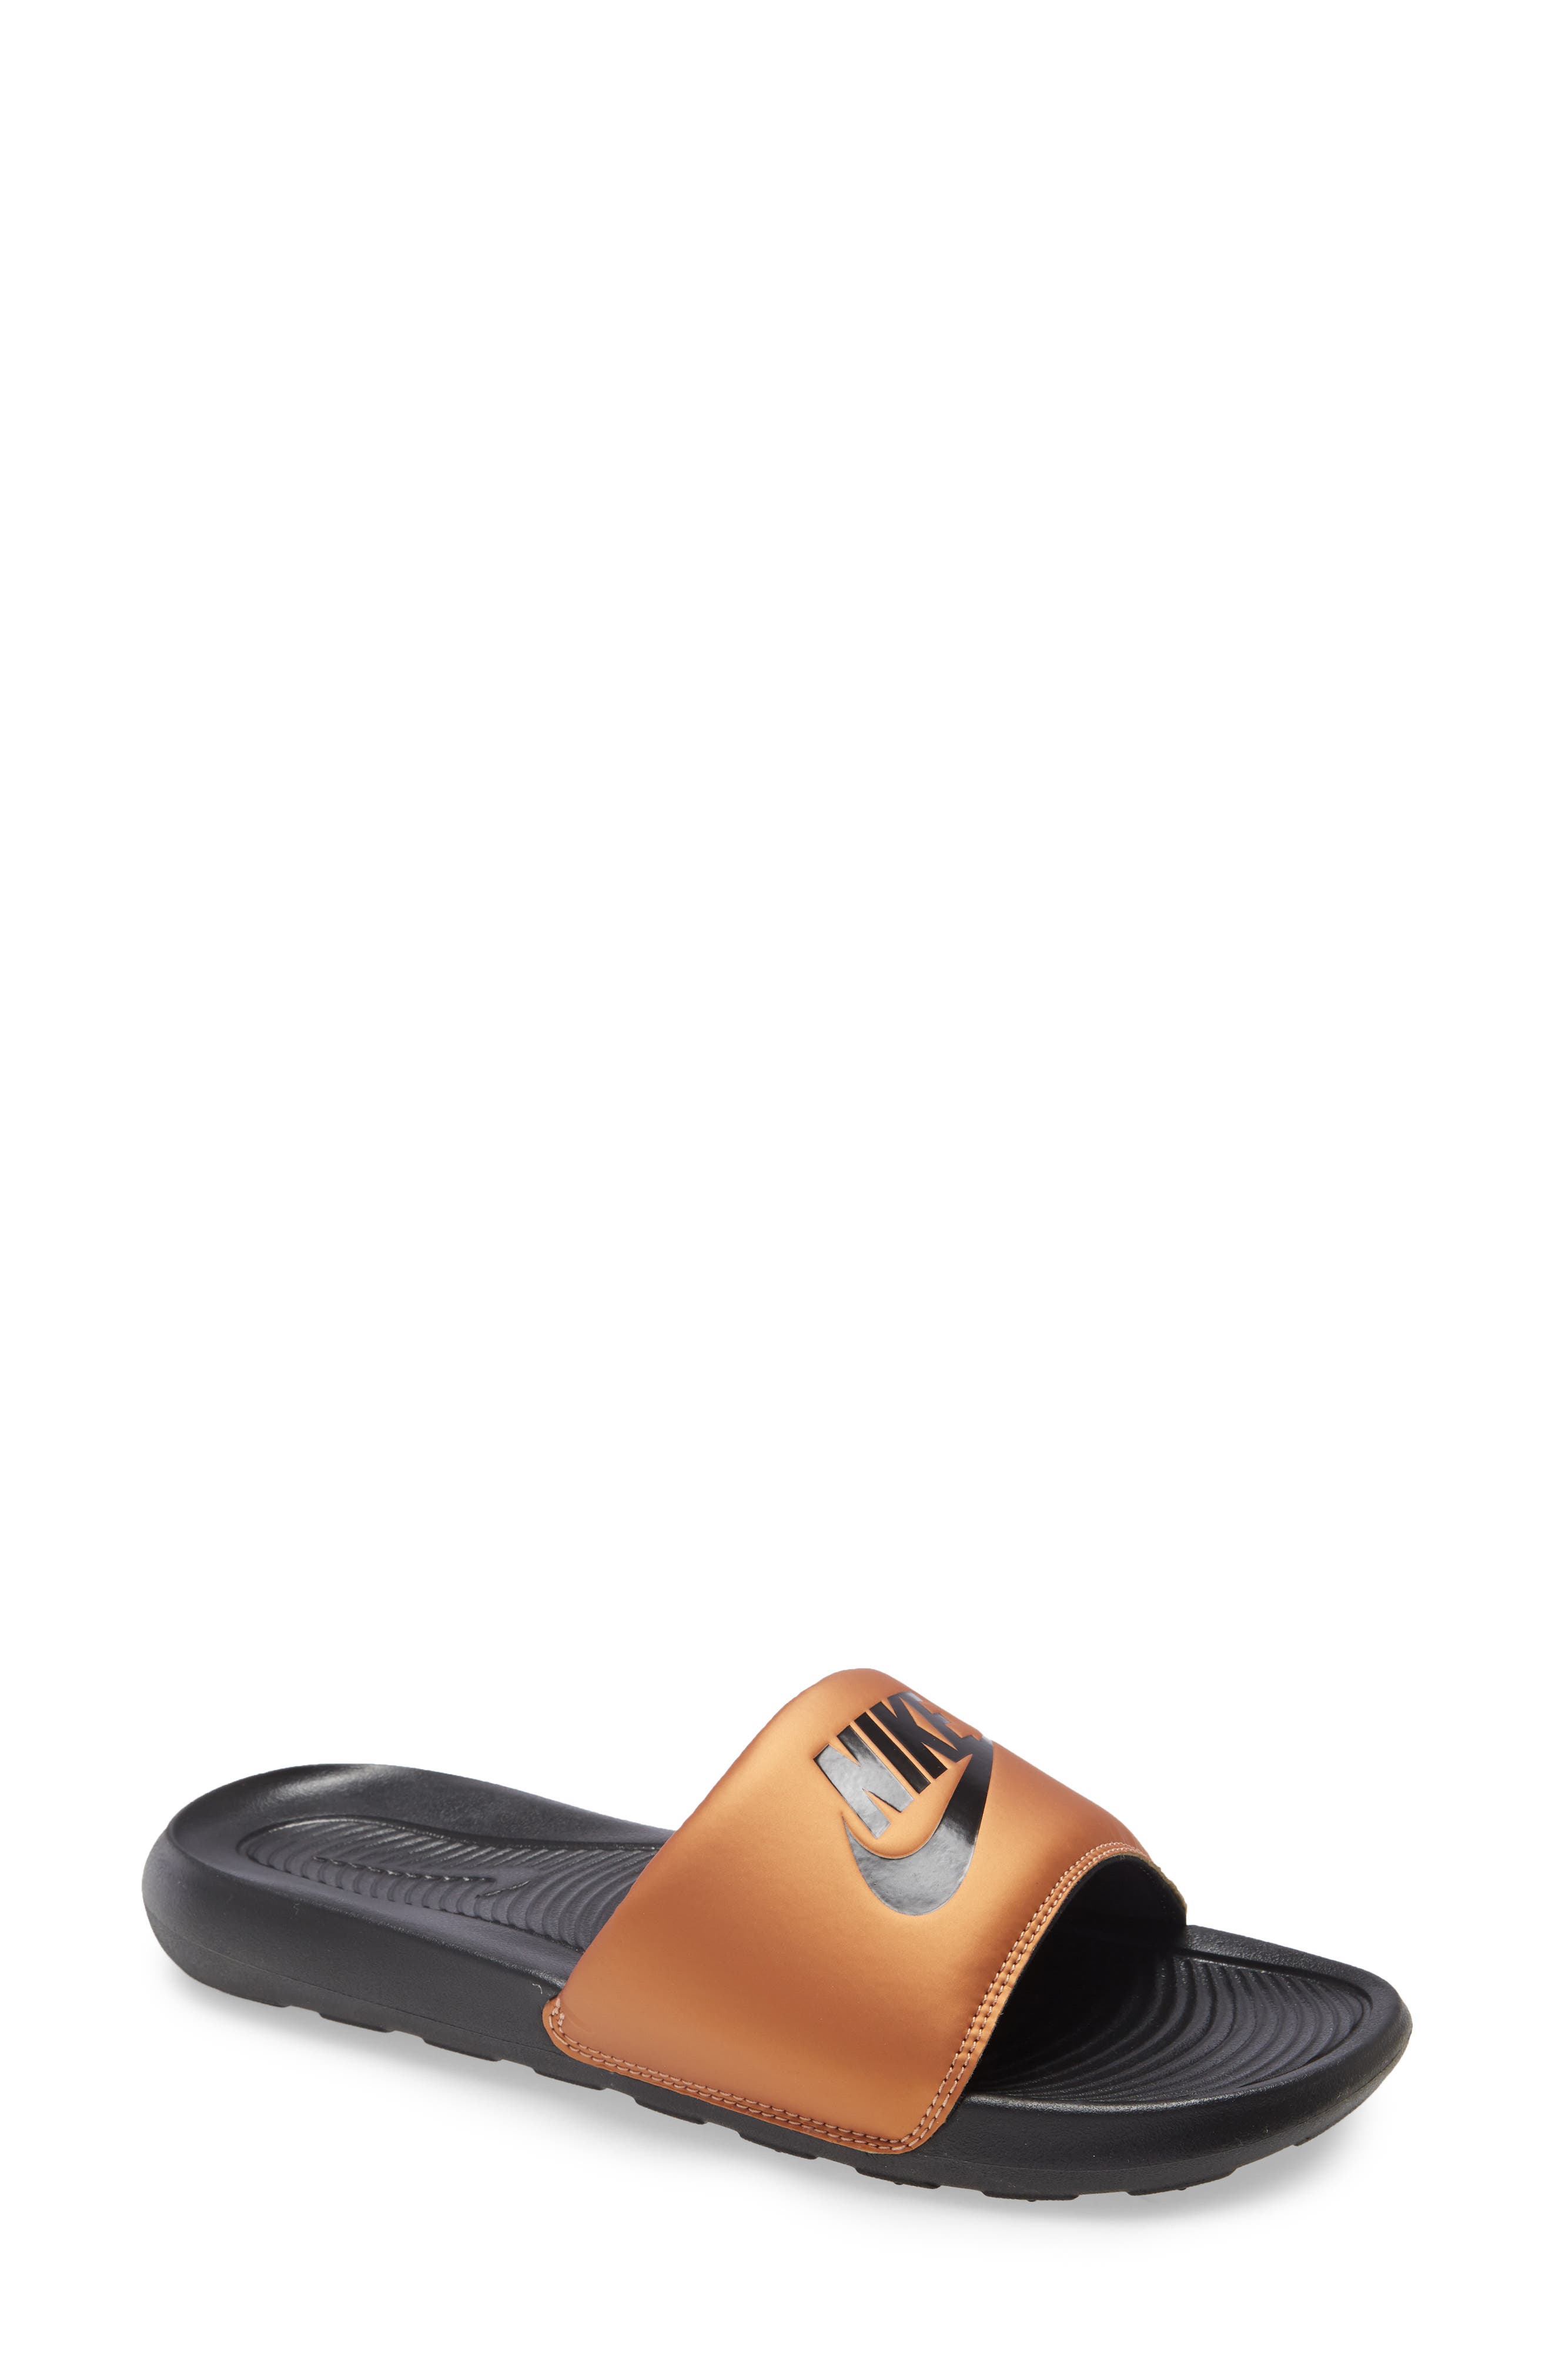 NIKE Victori Slide Sandal in Black/Metallic Copper